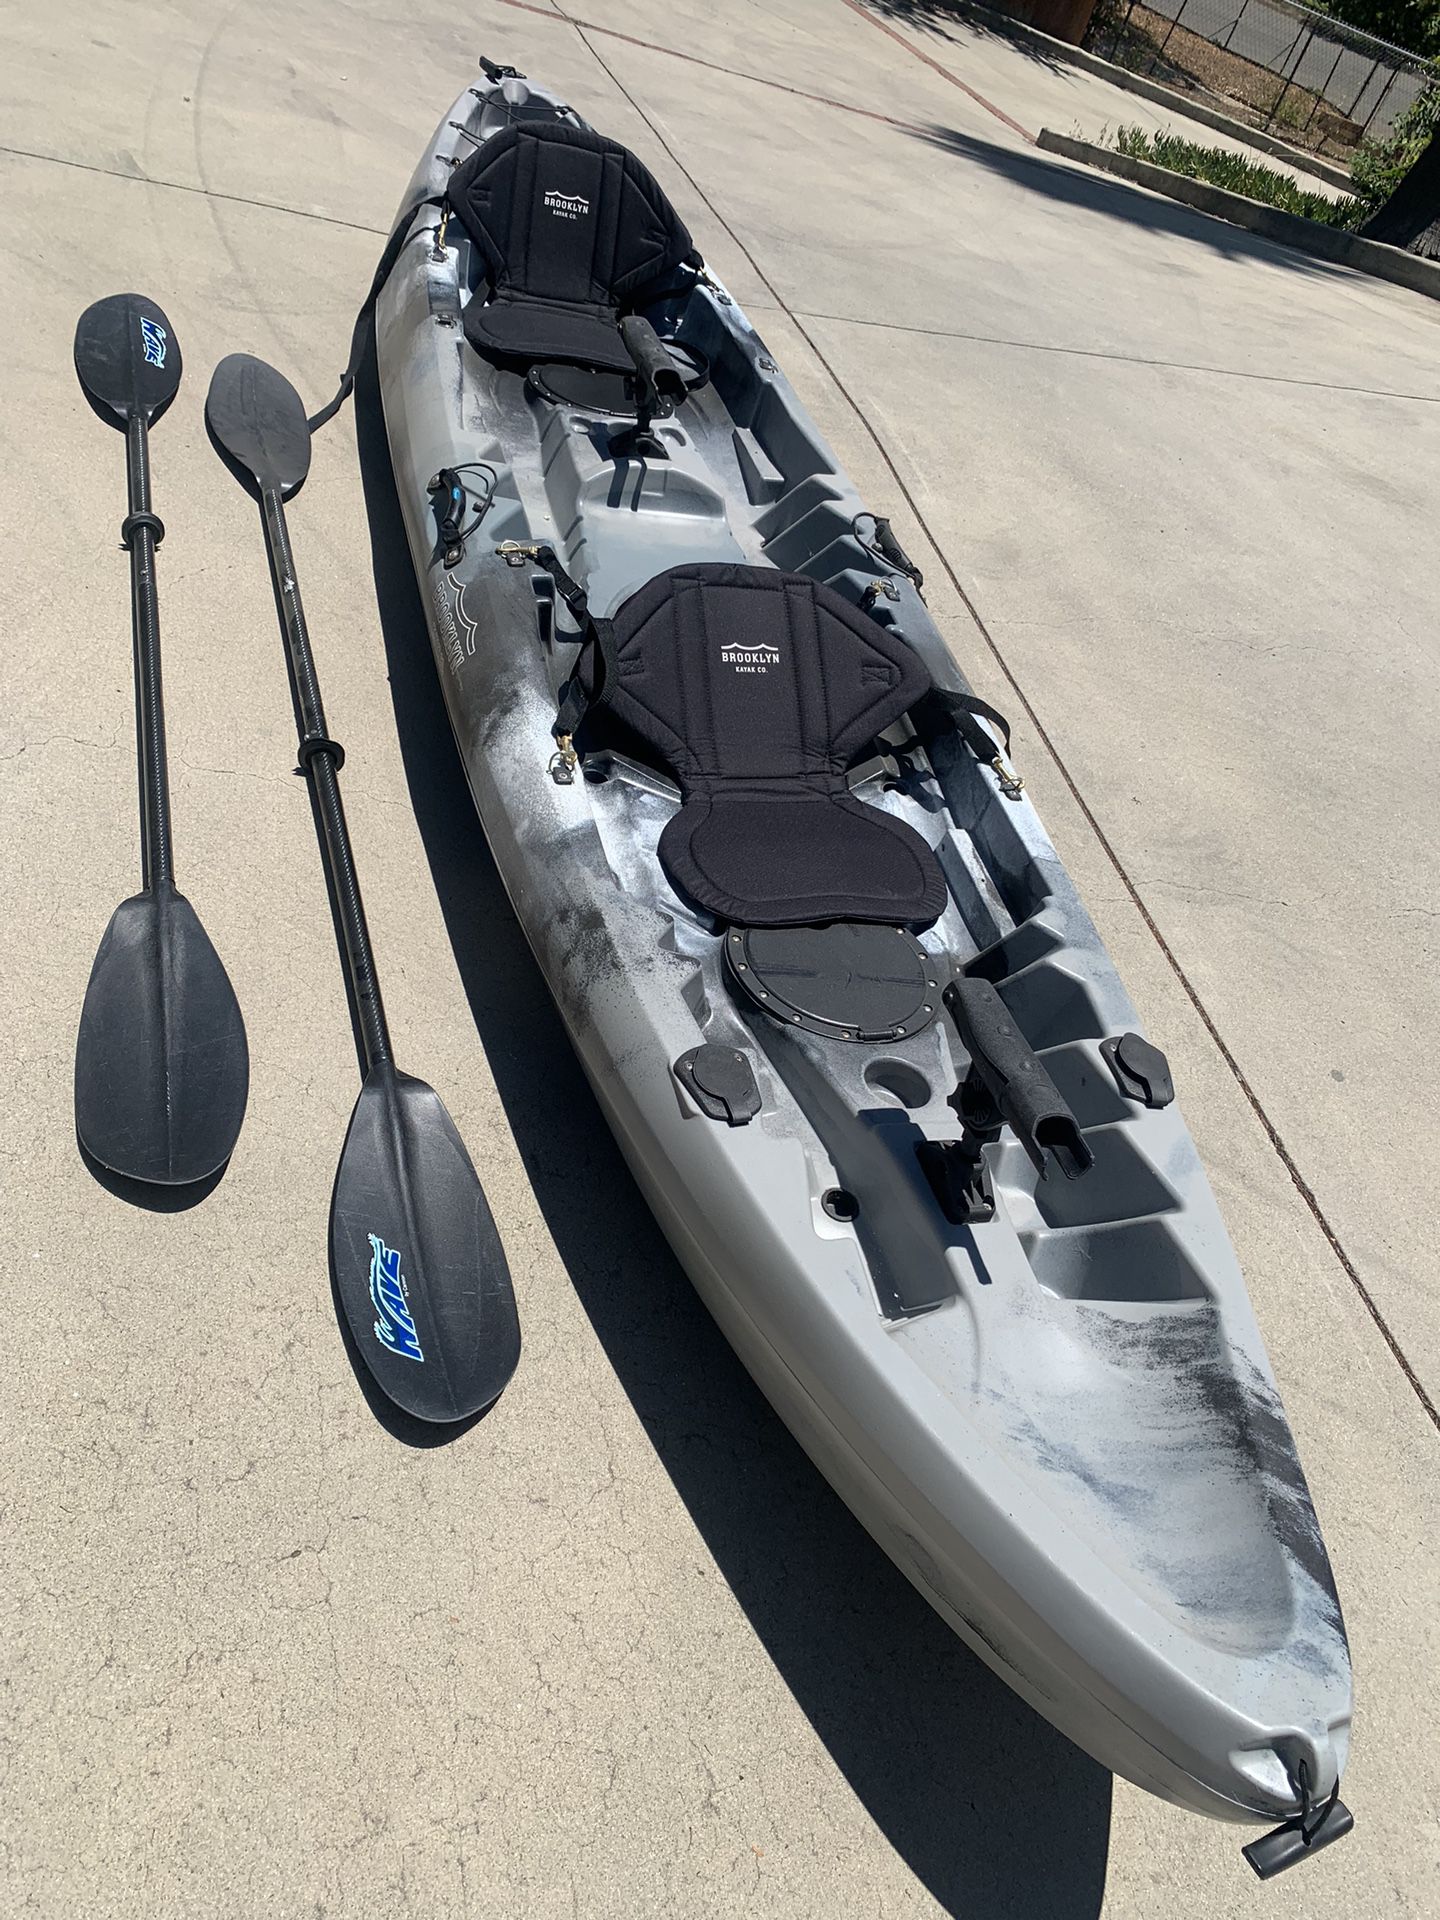 Tandem Fishing Kayak for Sale in El Cajon, CA - OfferUp